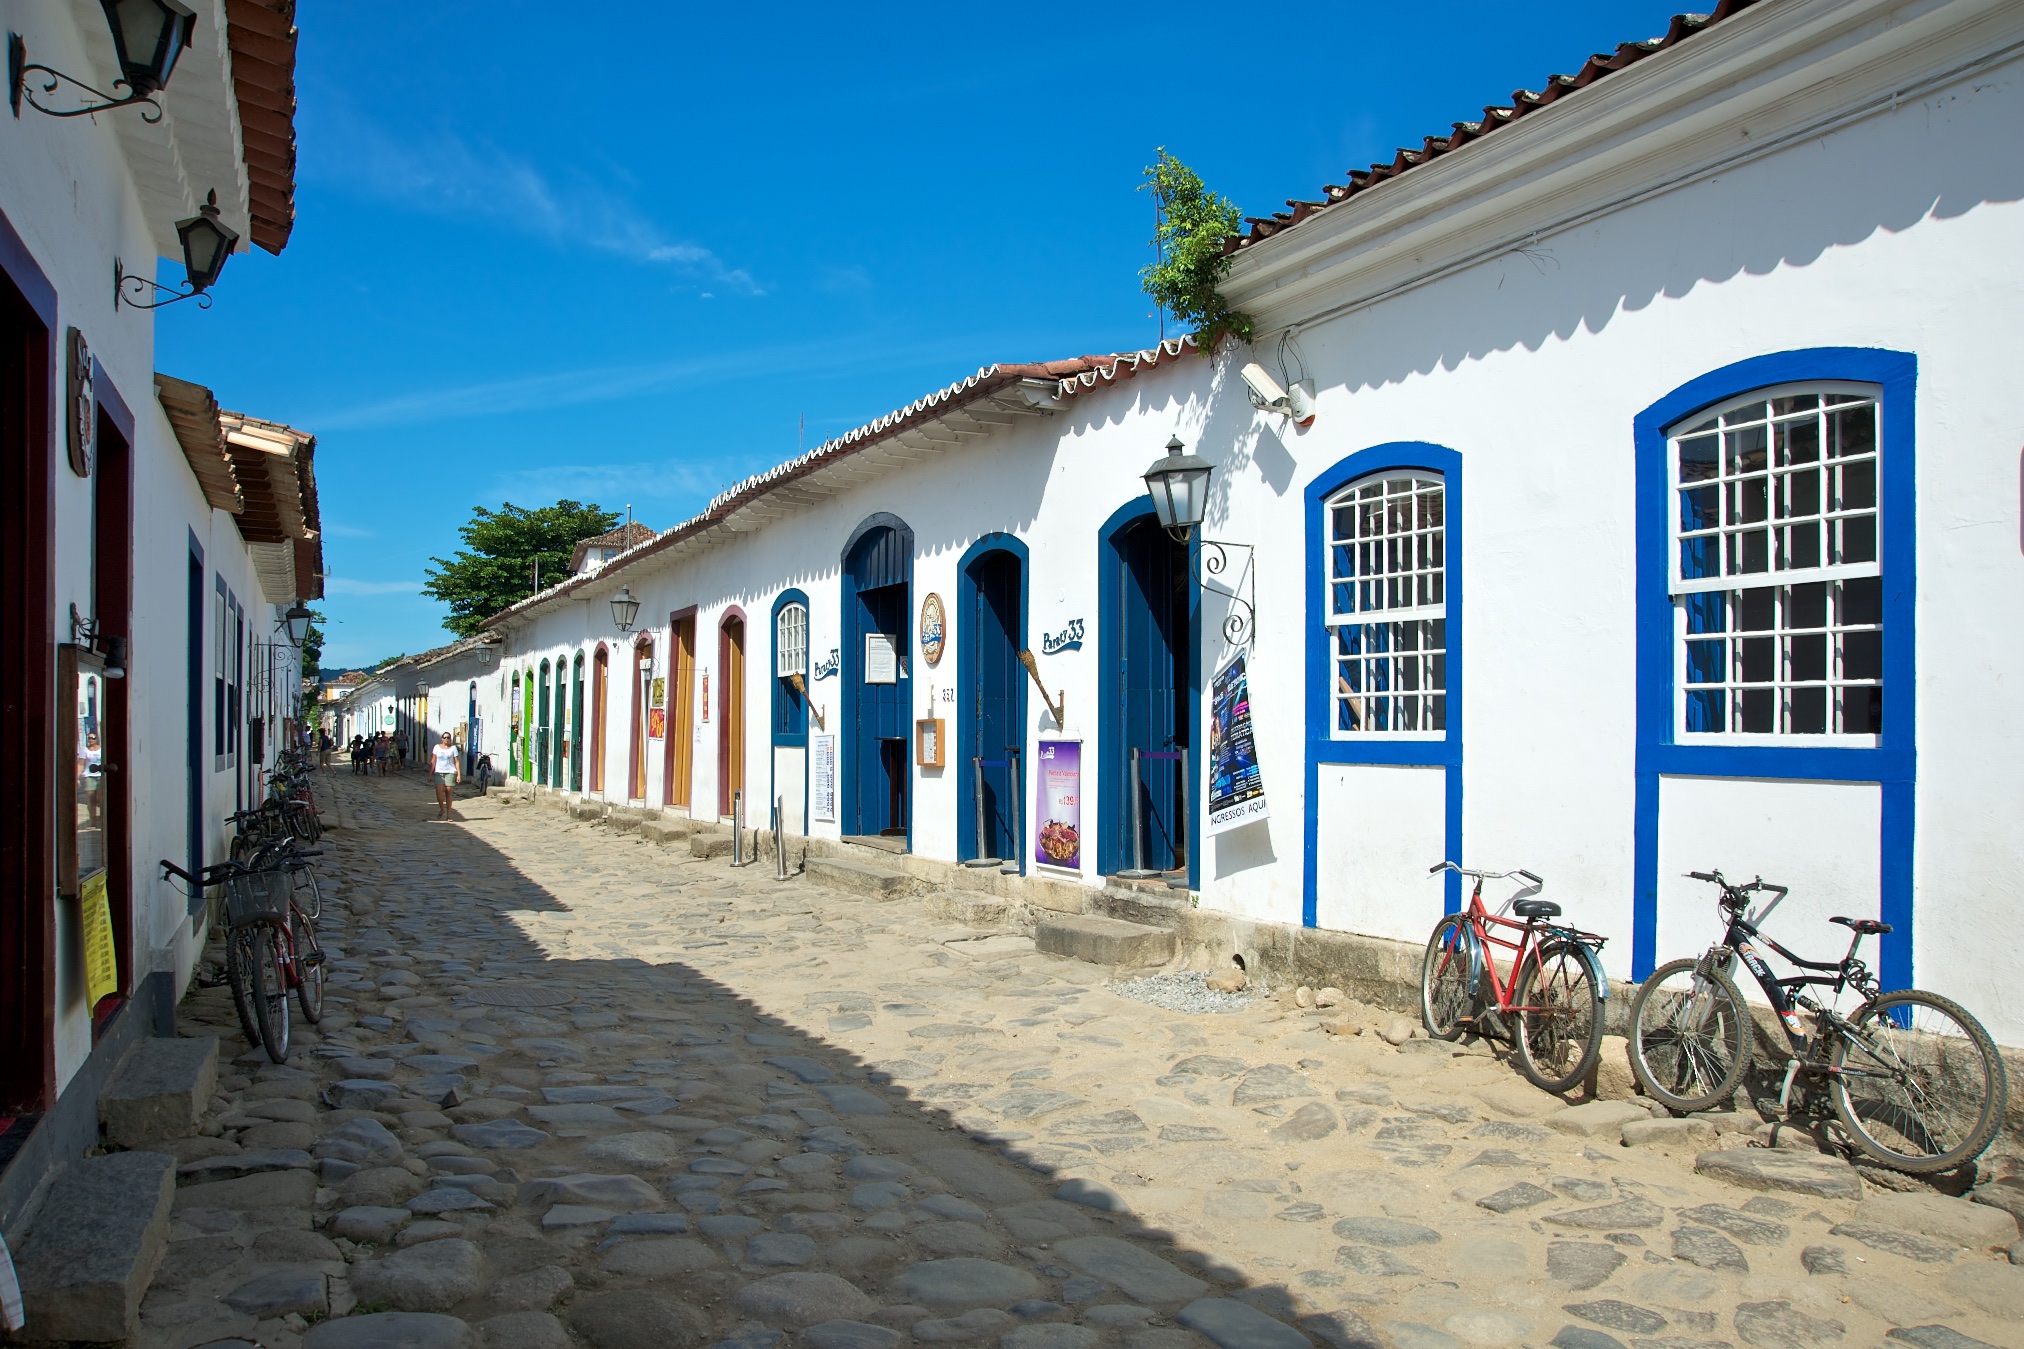  Street scene, Paraty, Costa Verde, Brazil 